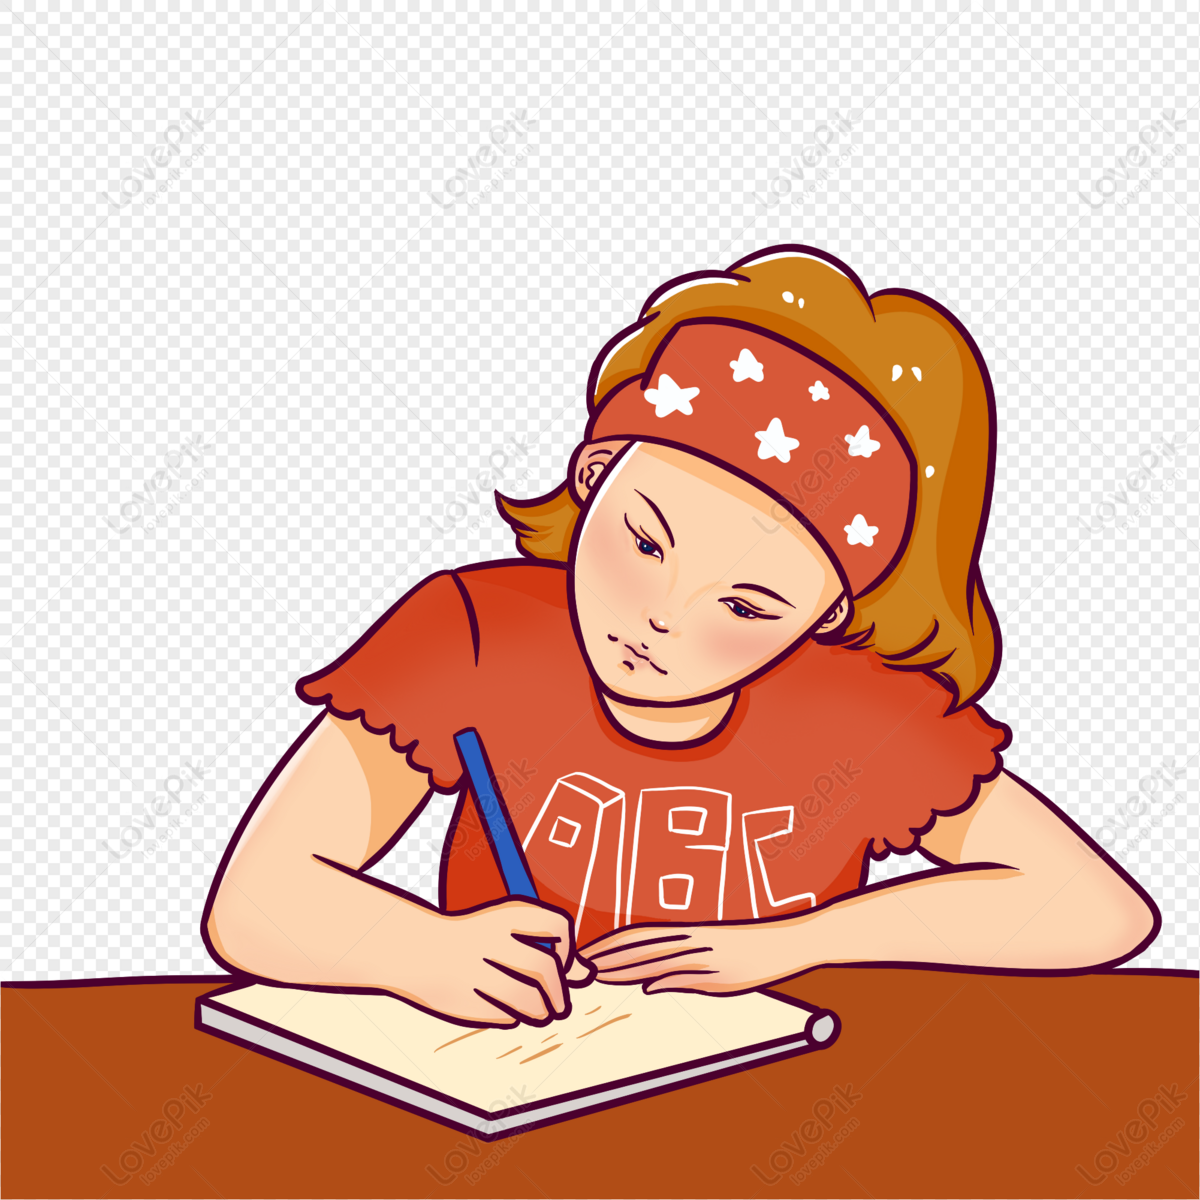 Girl writing homework, plan, work at home, writing girl png image